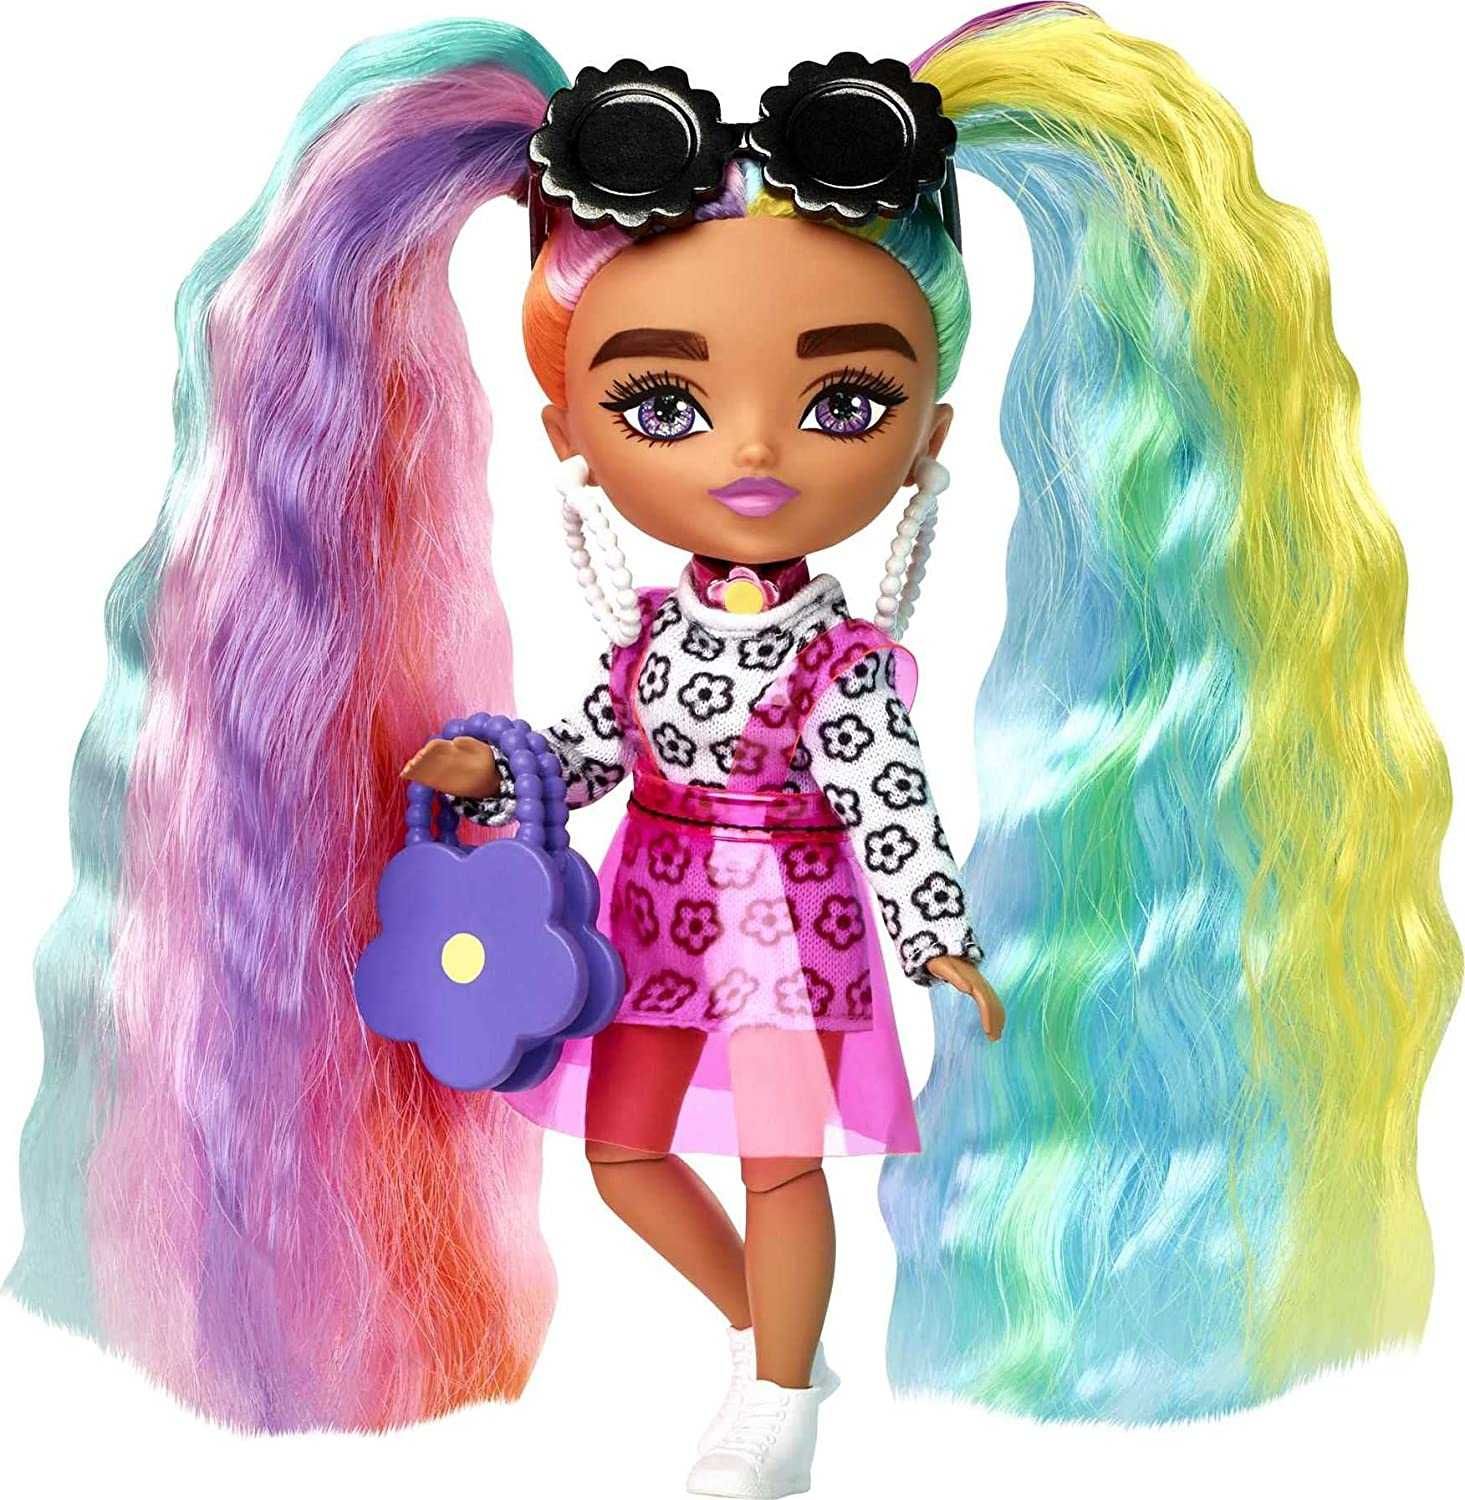 ОРИГИНАЛ! Кукла Барби Экстра Минис Модница #5,6,8 Barbie Extra Minis